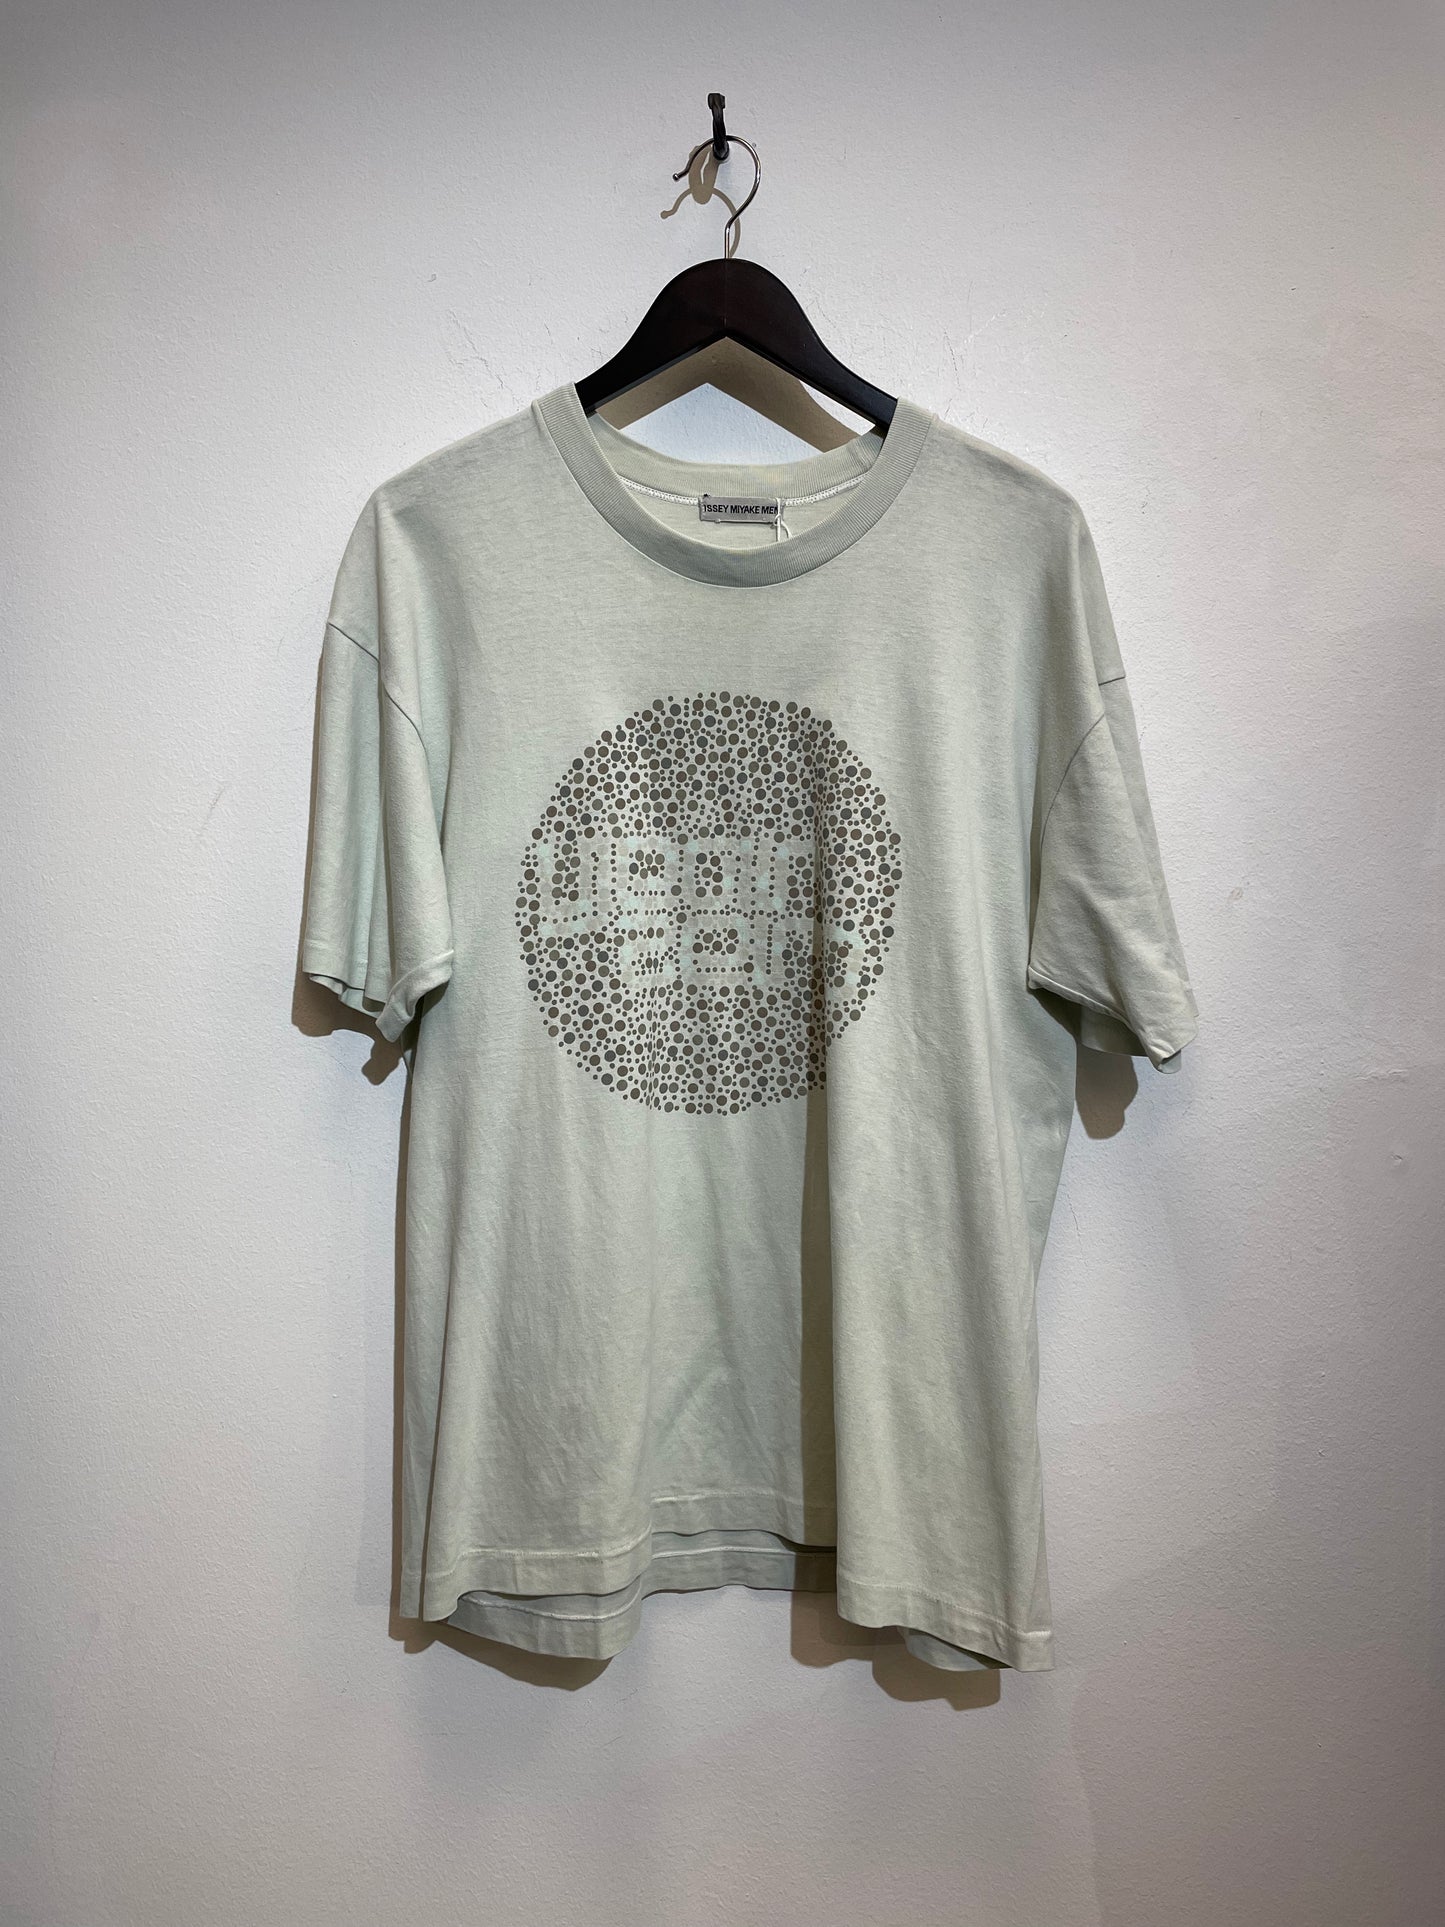 T-shirt - ISSEY MIYAKE - Abiti Vintage & Sales